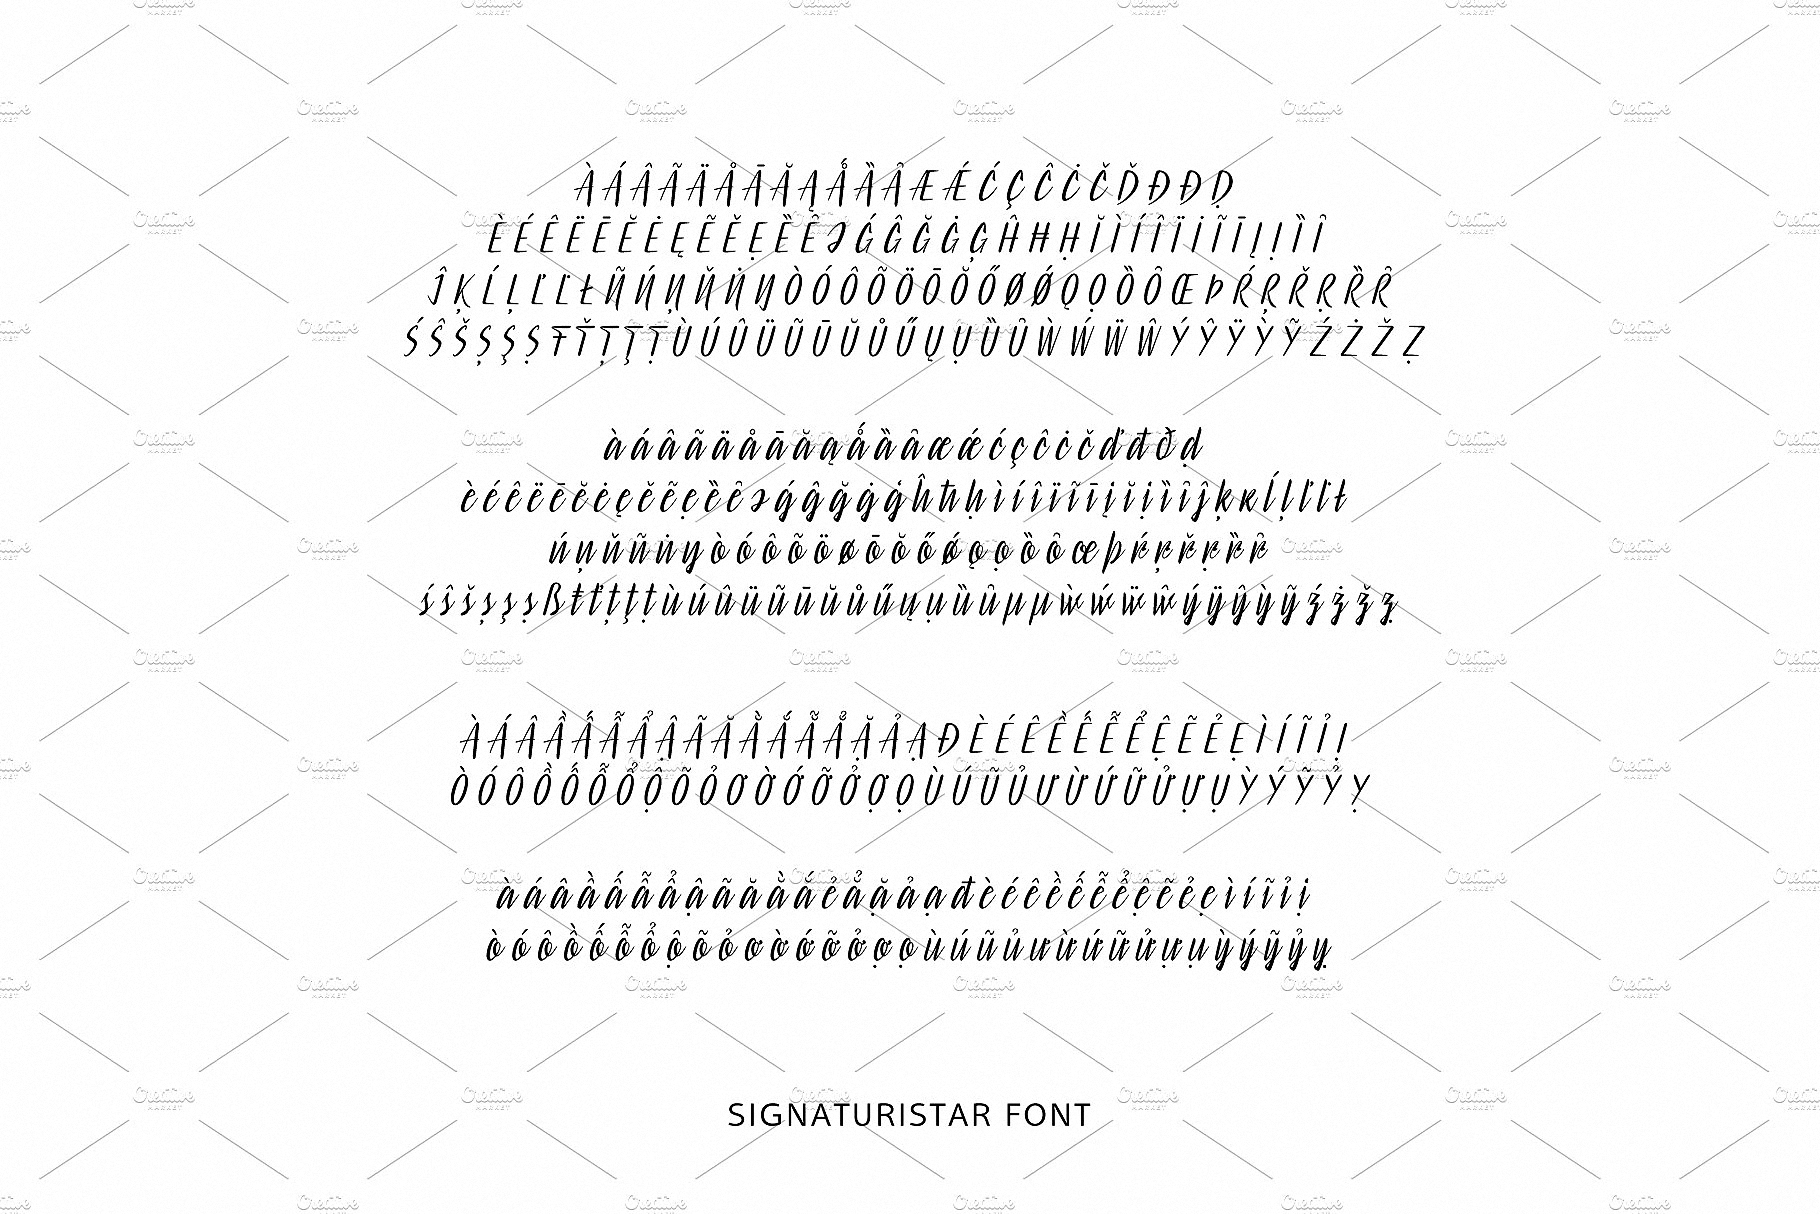 Example font Signaturistar #5